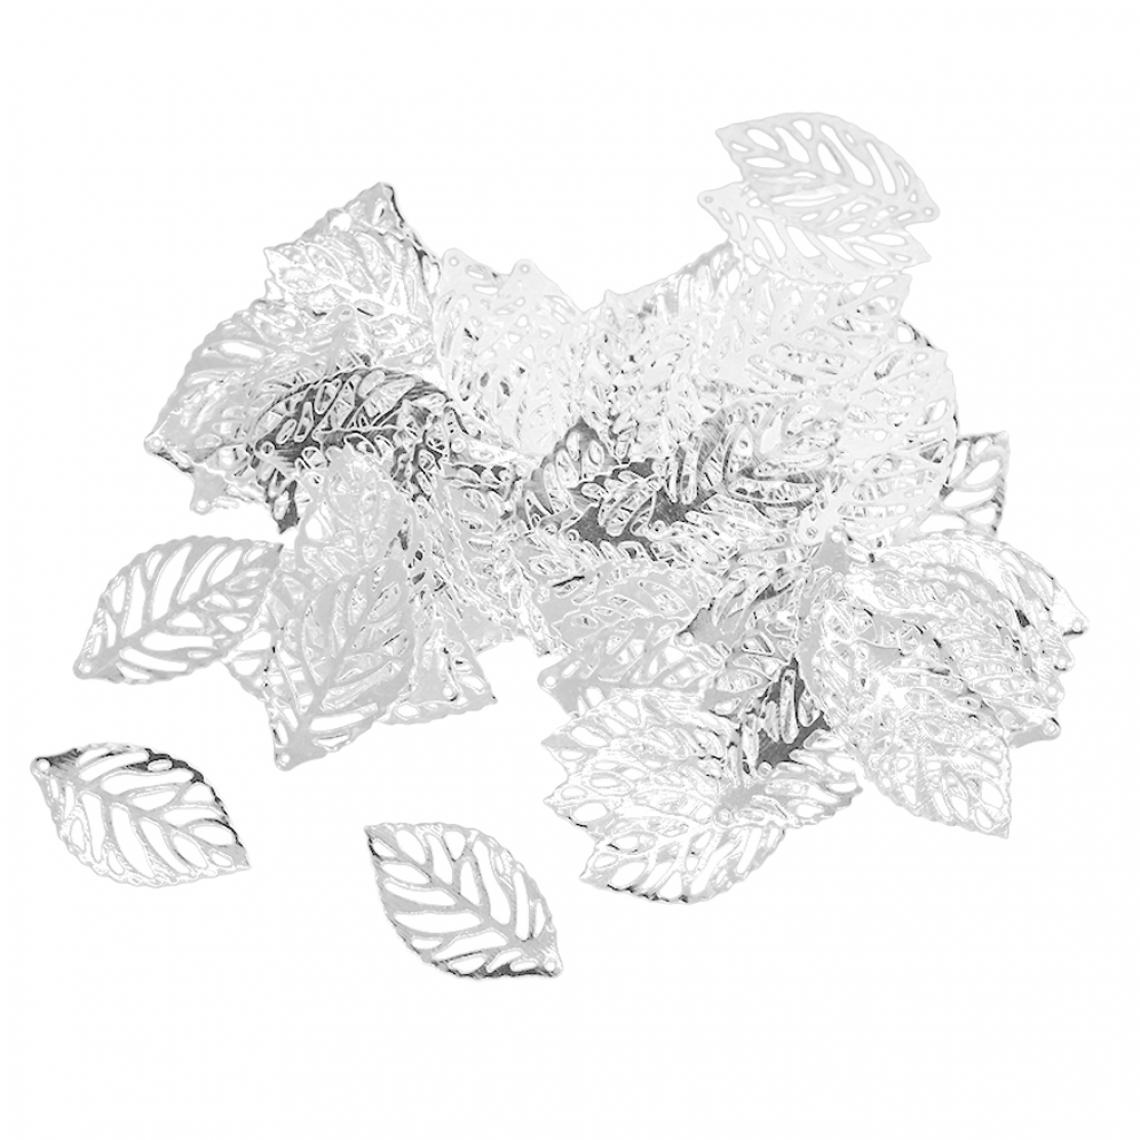 marque generique - 100 pièces de feuilles d'arbre percées breloque pendentif en cuivre - Perles